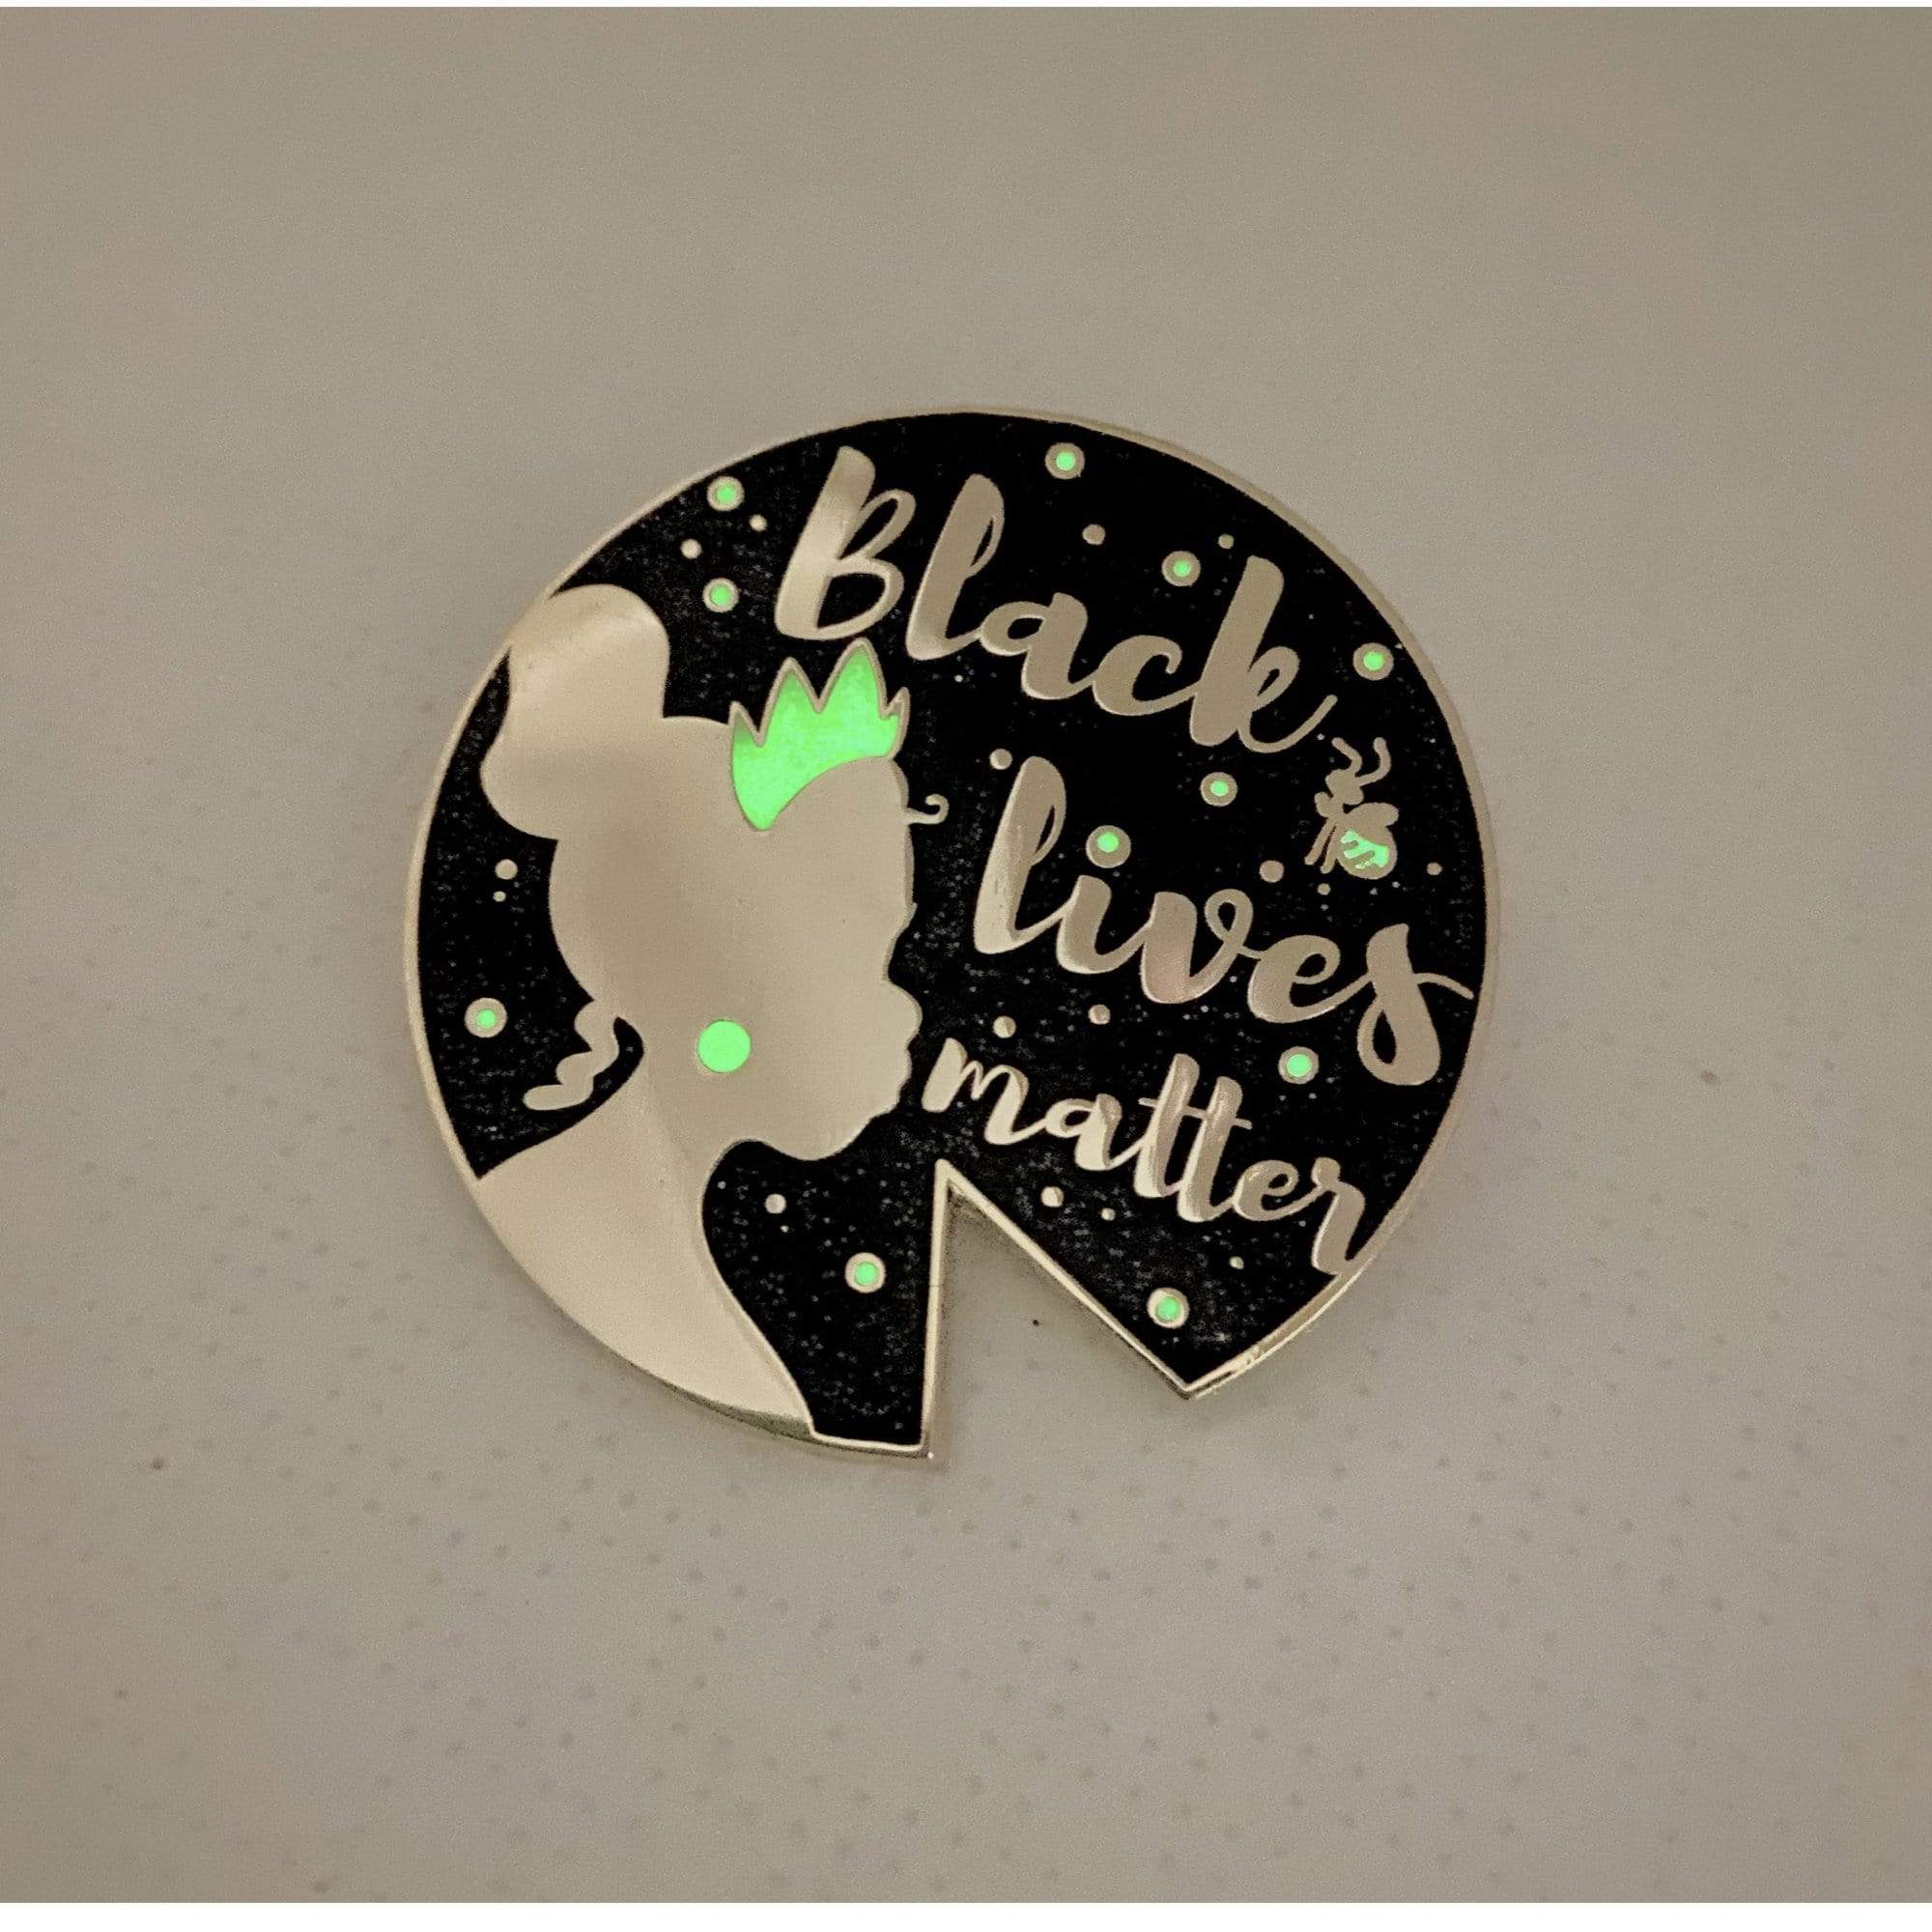 cuddlefish Black Lives Matter Princess Pin